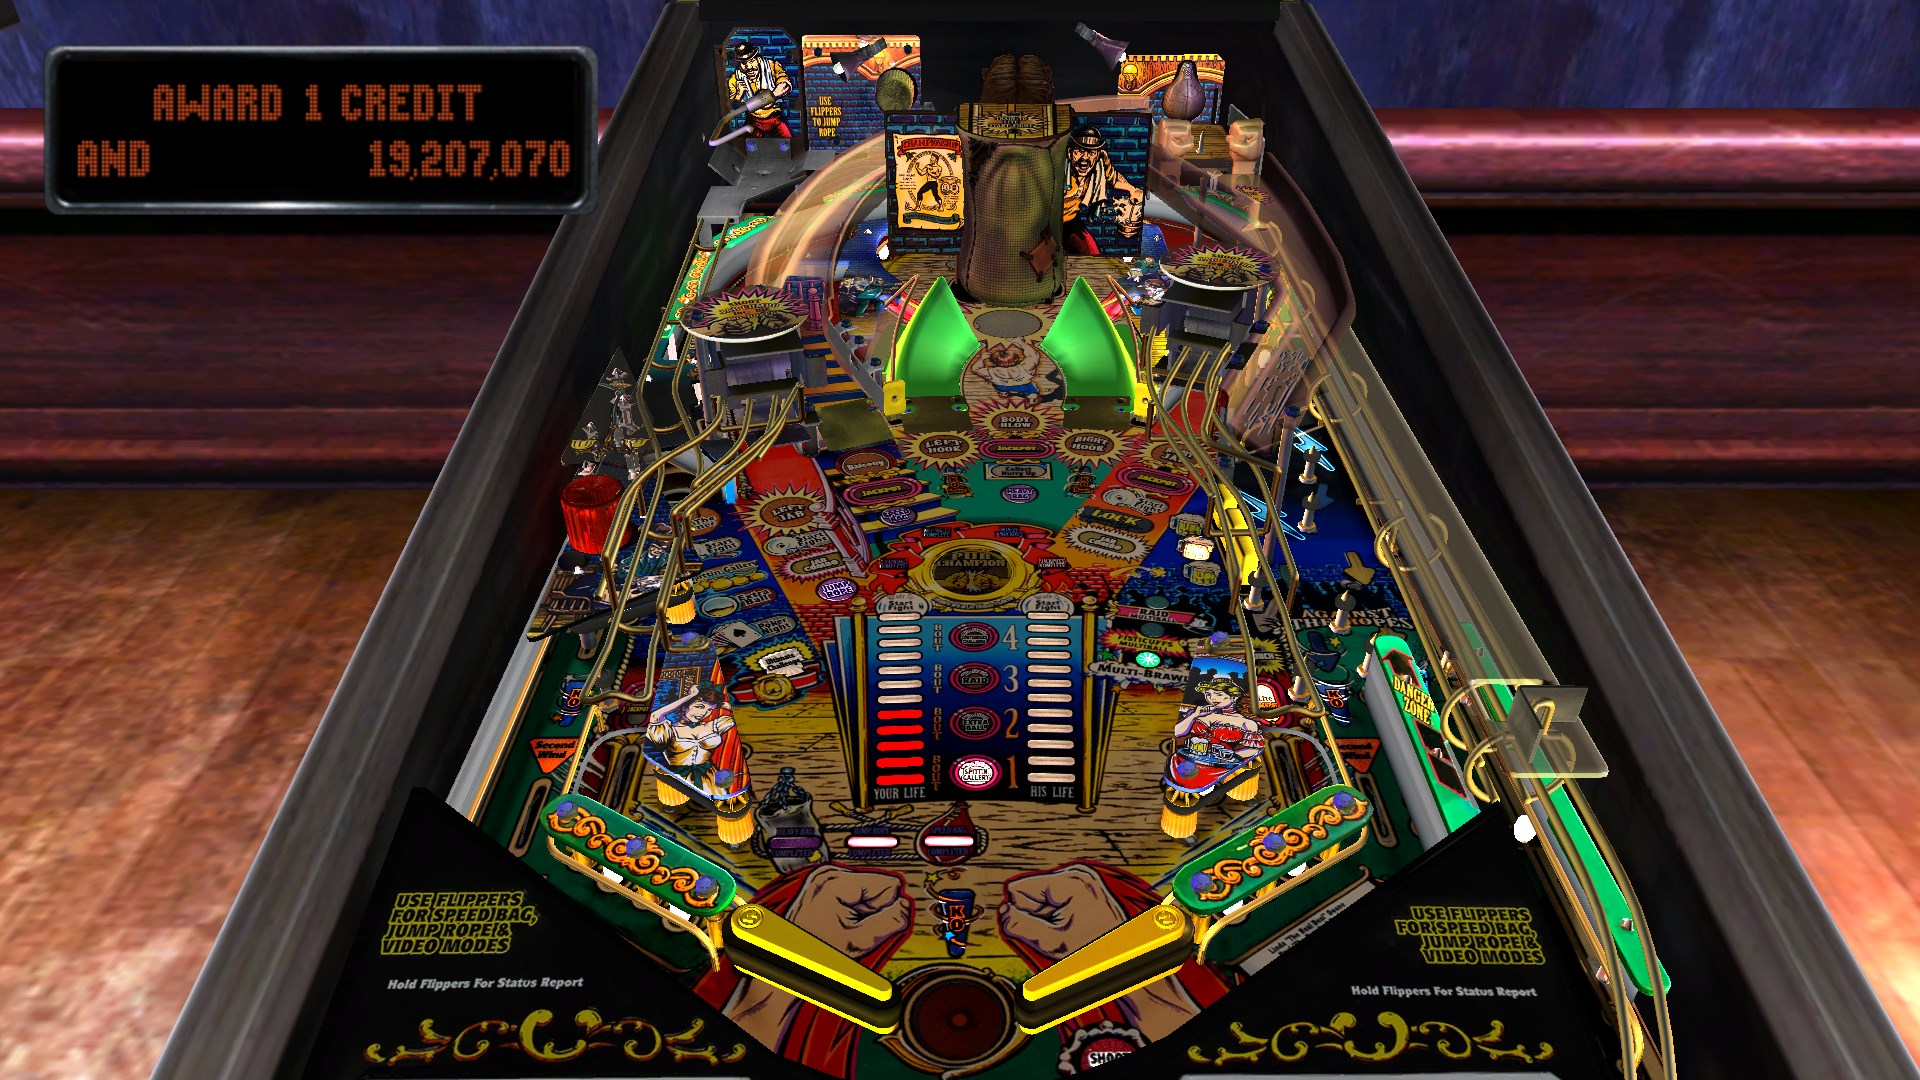 Jigg: Pinball Arcade: The Champion Pub (PC) 19,207,070 points on 2014-12-30 10:55:31